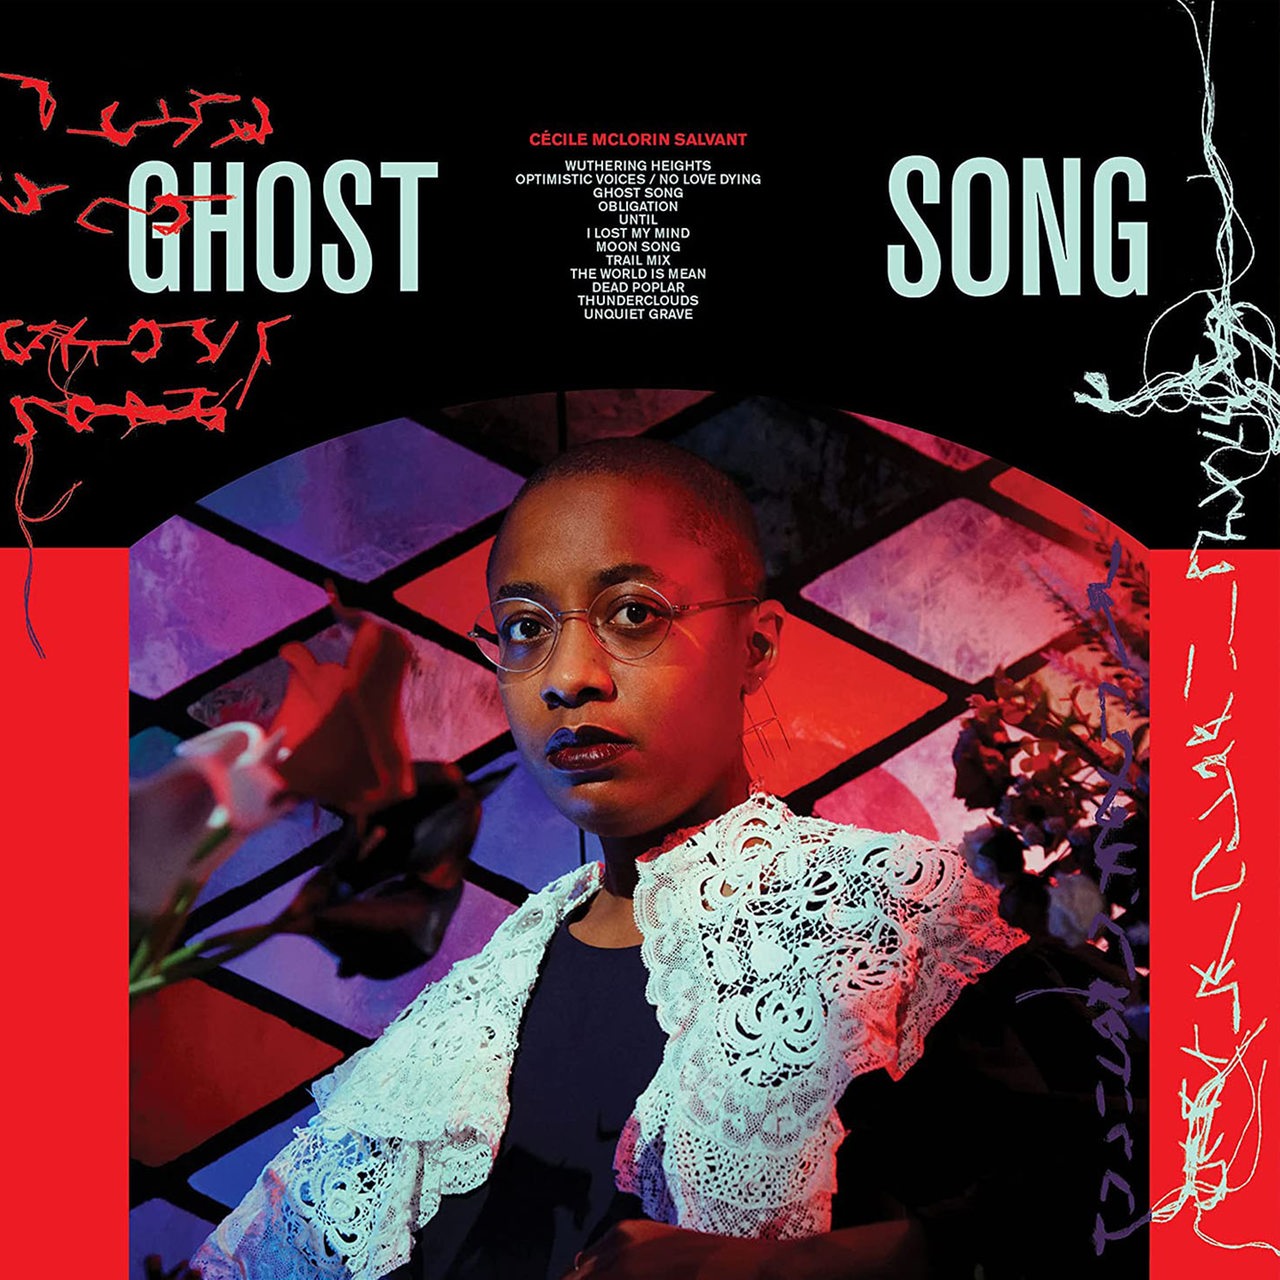 Albumcover von Cécile McLorin Salvant "Ghost song"